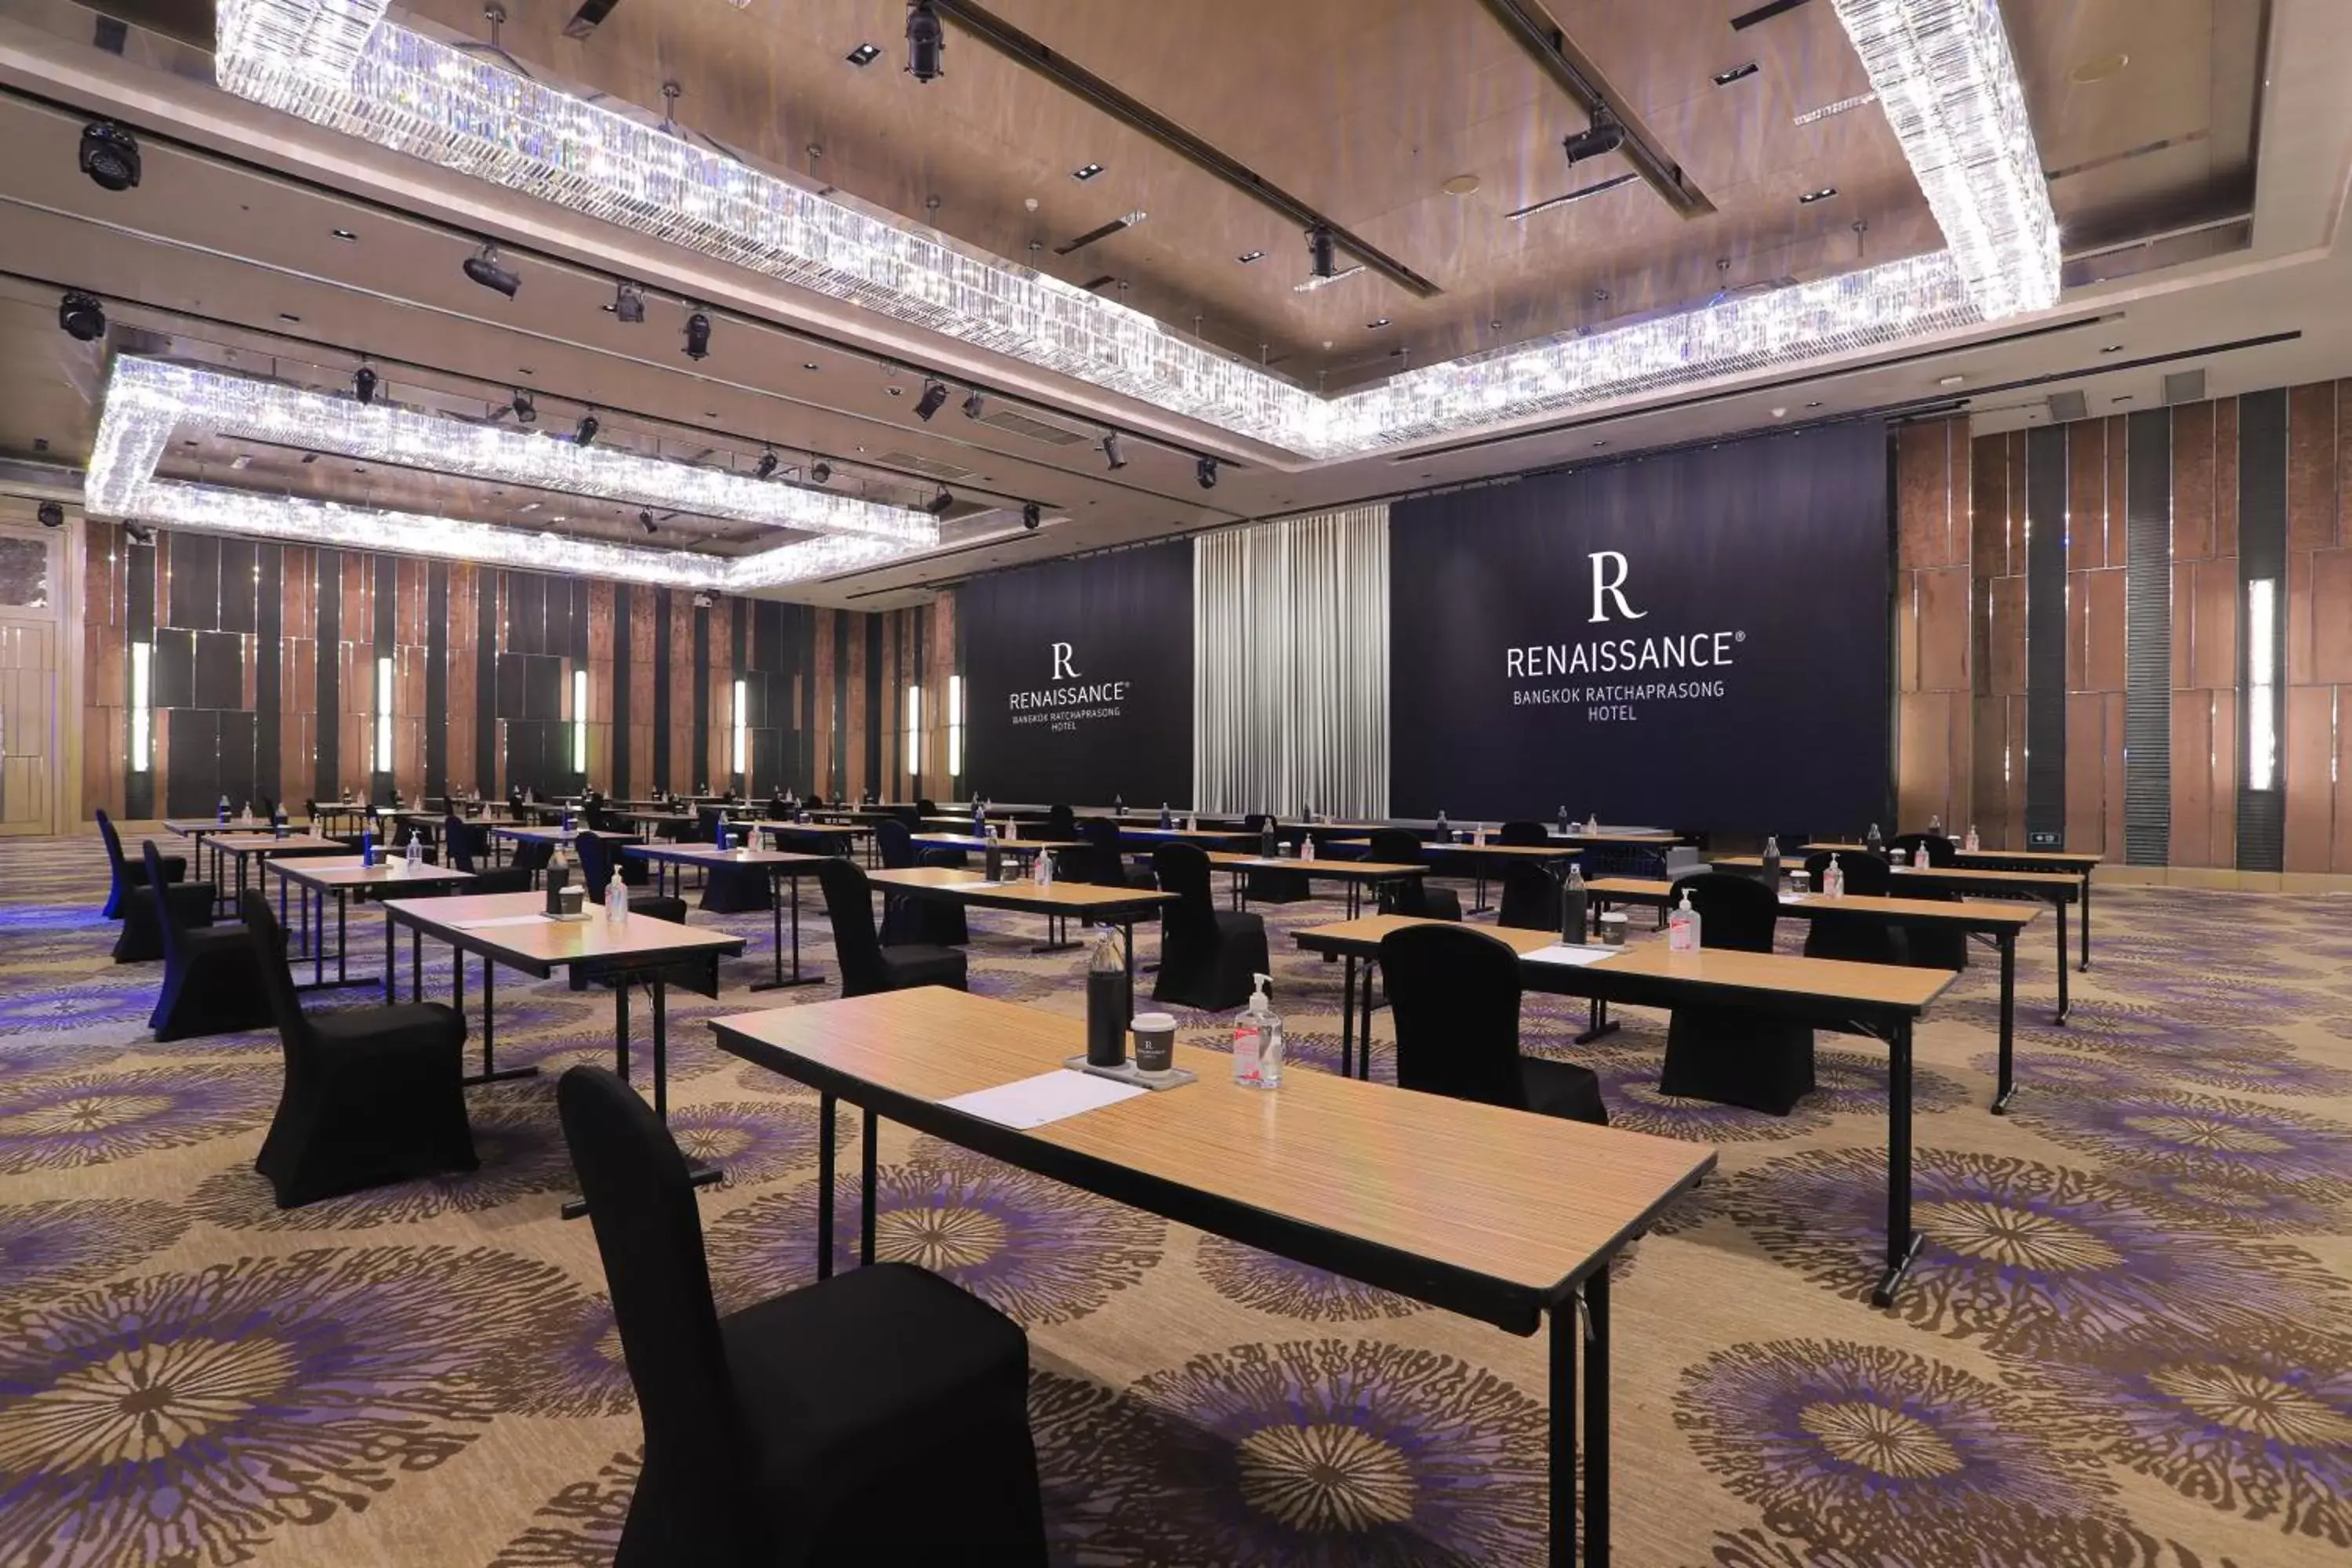 Meeting/conference room in Renaissance Bangkok Ratchaprasong Hotel